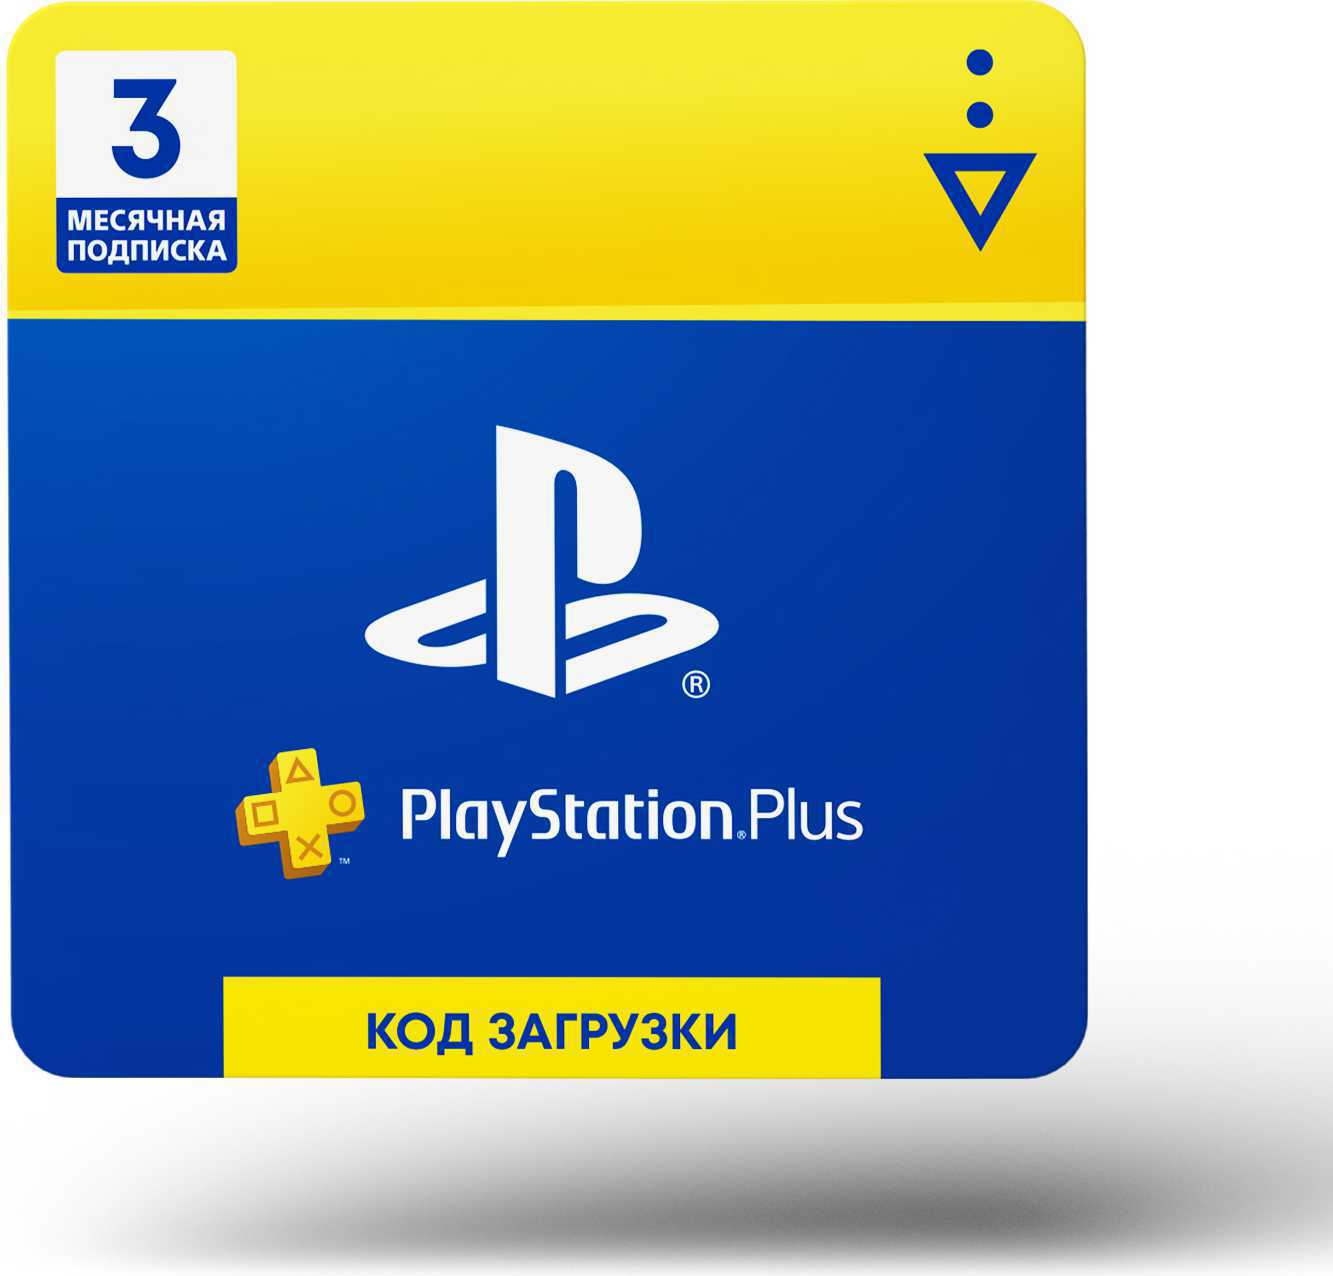 PS Store: Подписка PlayStation Plus (3 месяца) [Цифровая версия] (Цифровая версия)